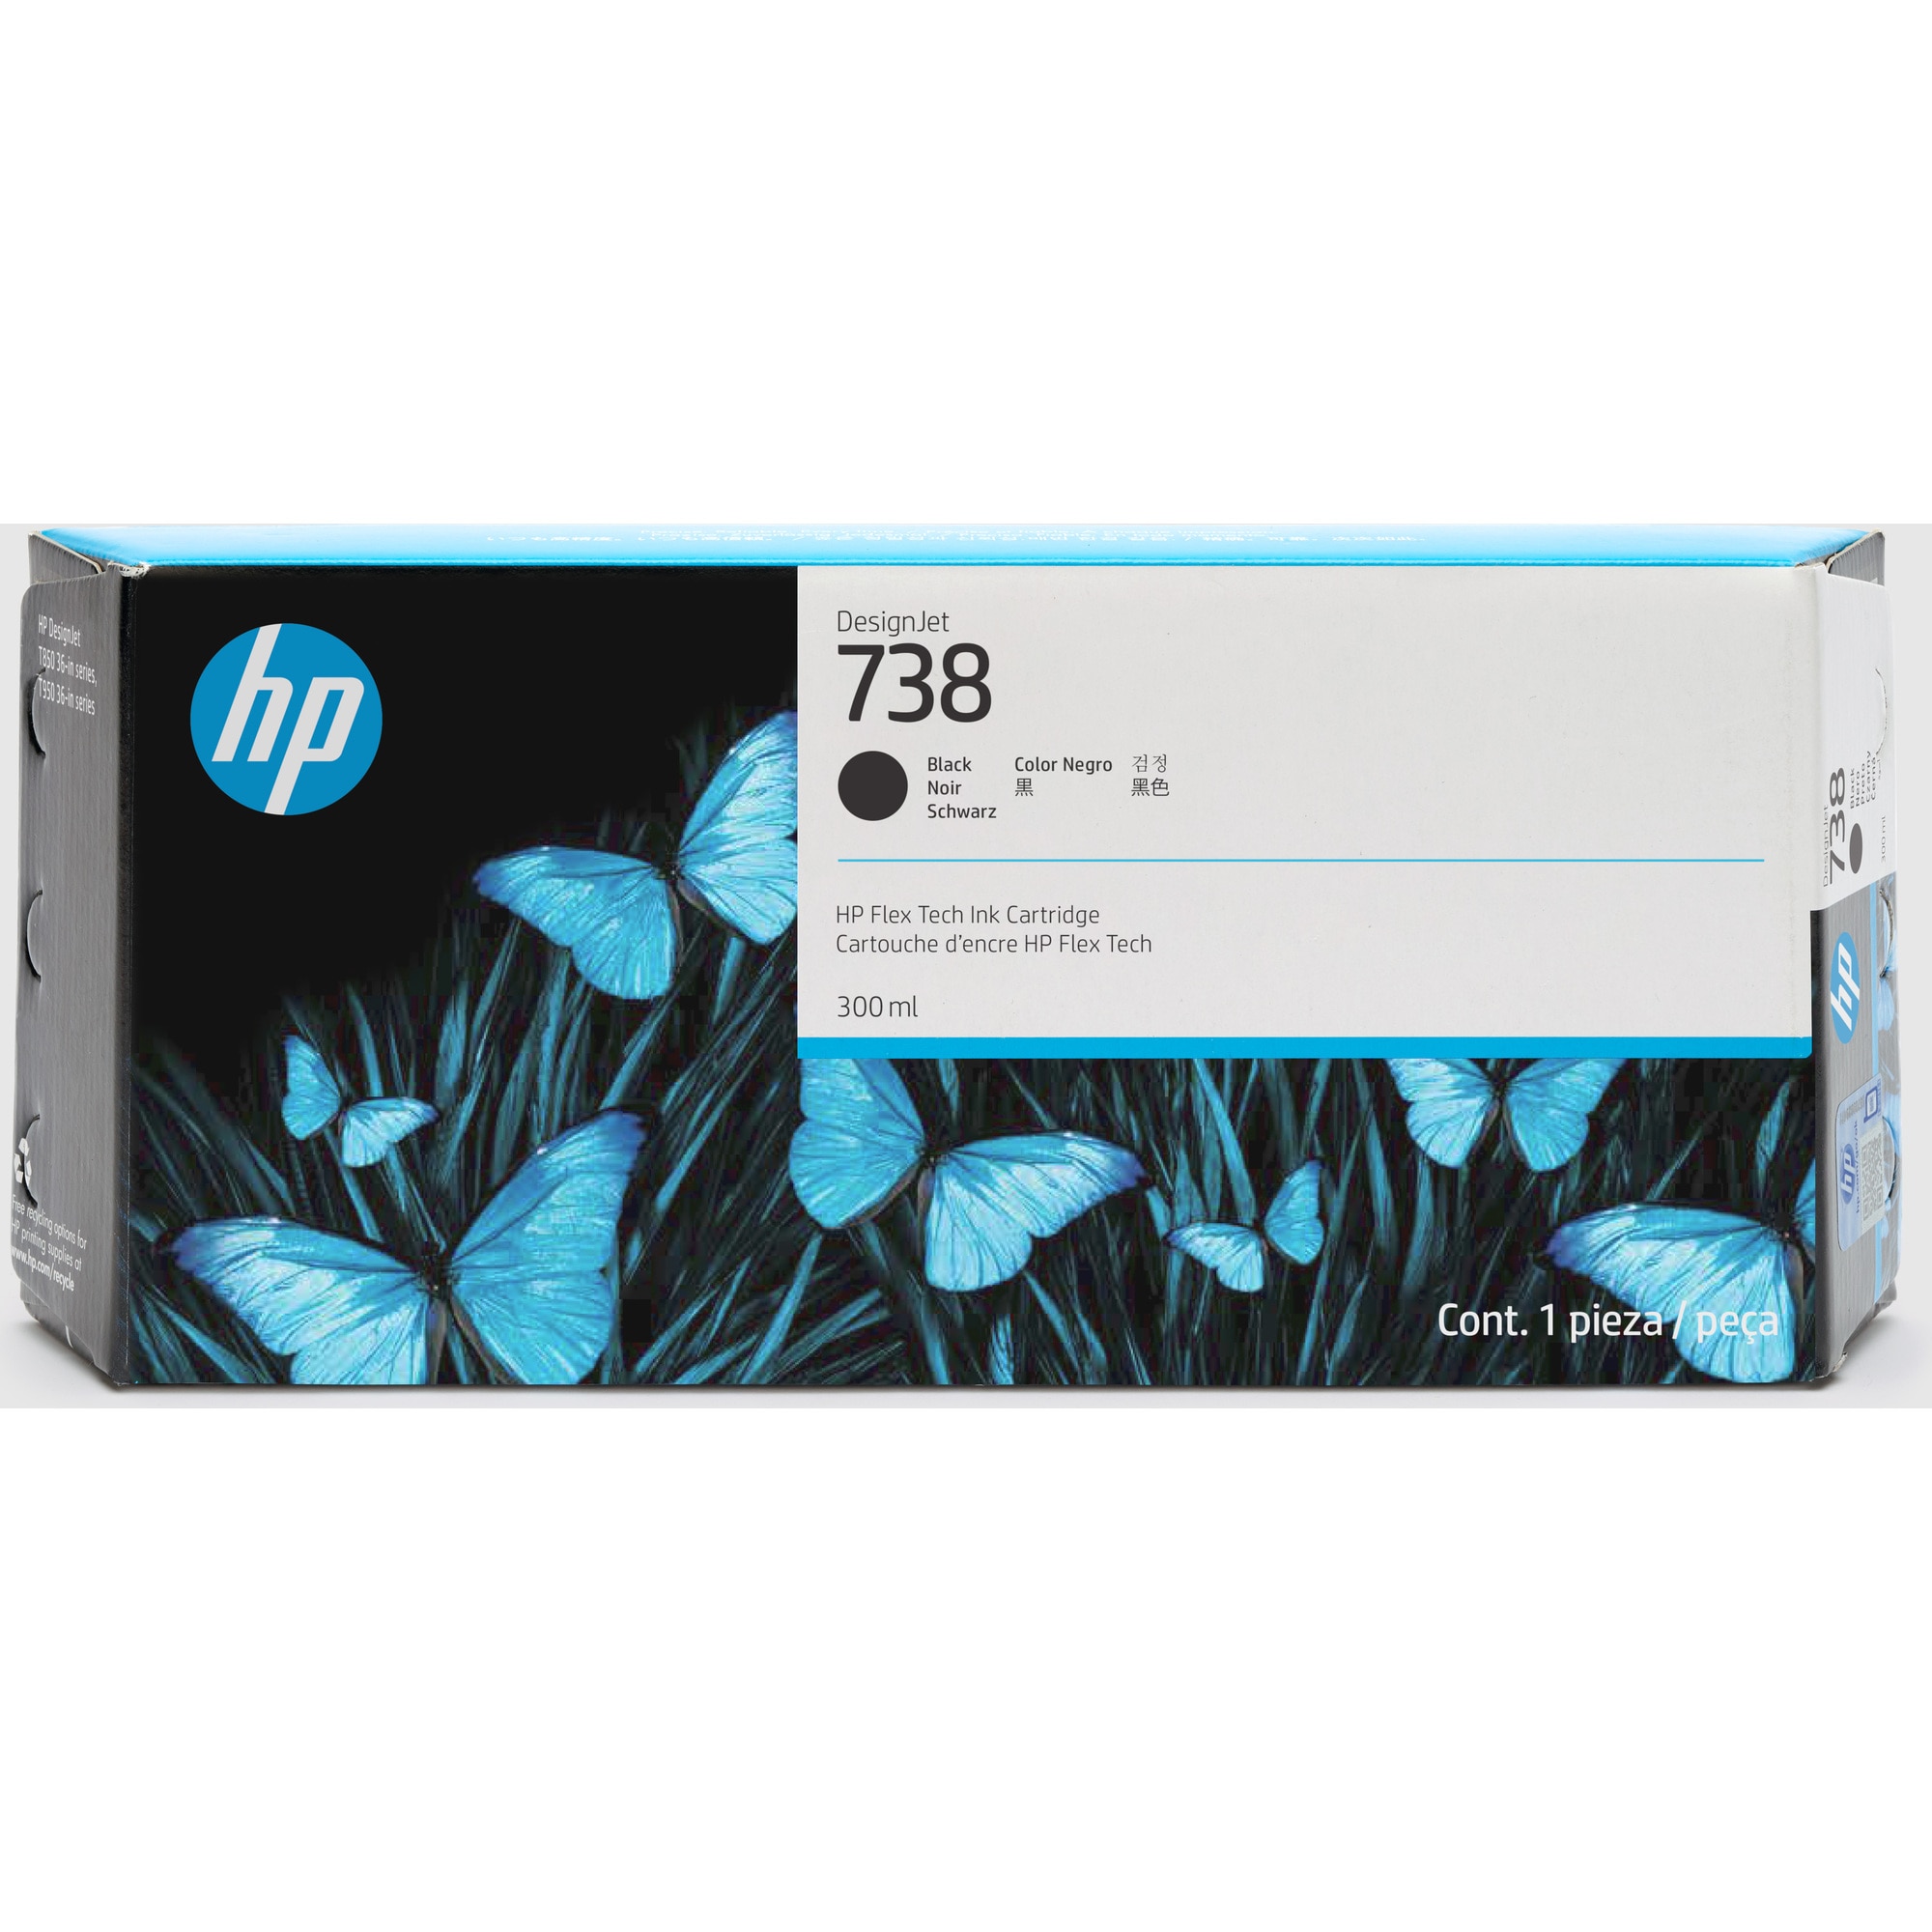 HP 738 300-ml Black DesignJet Ink Cartridge0 